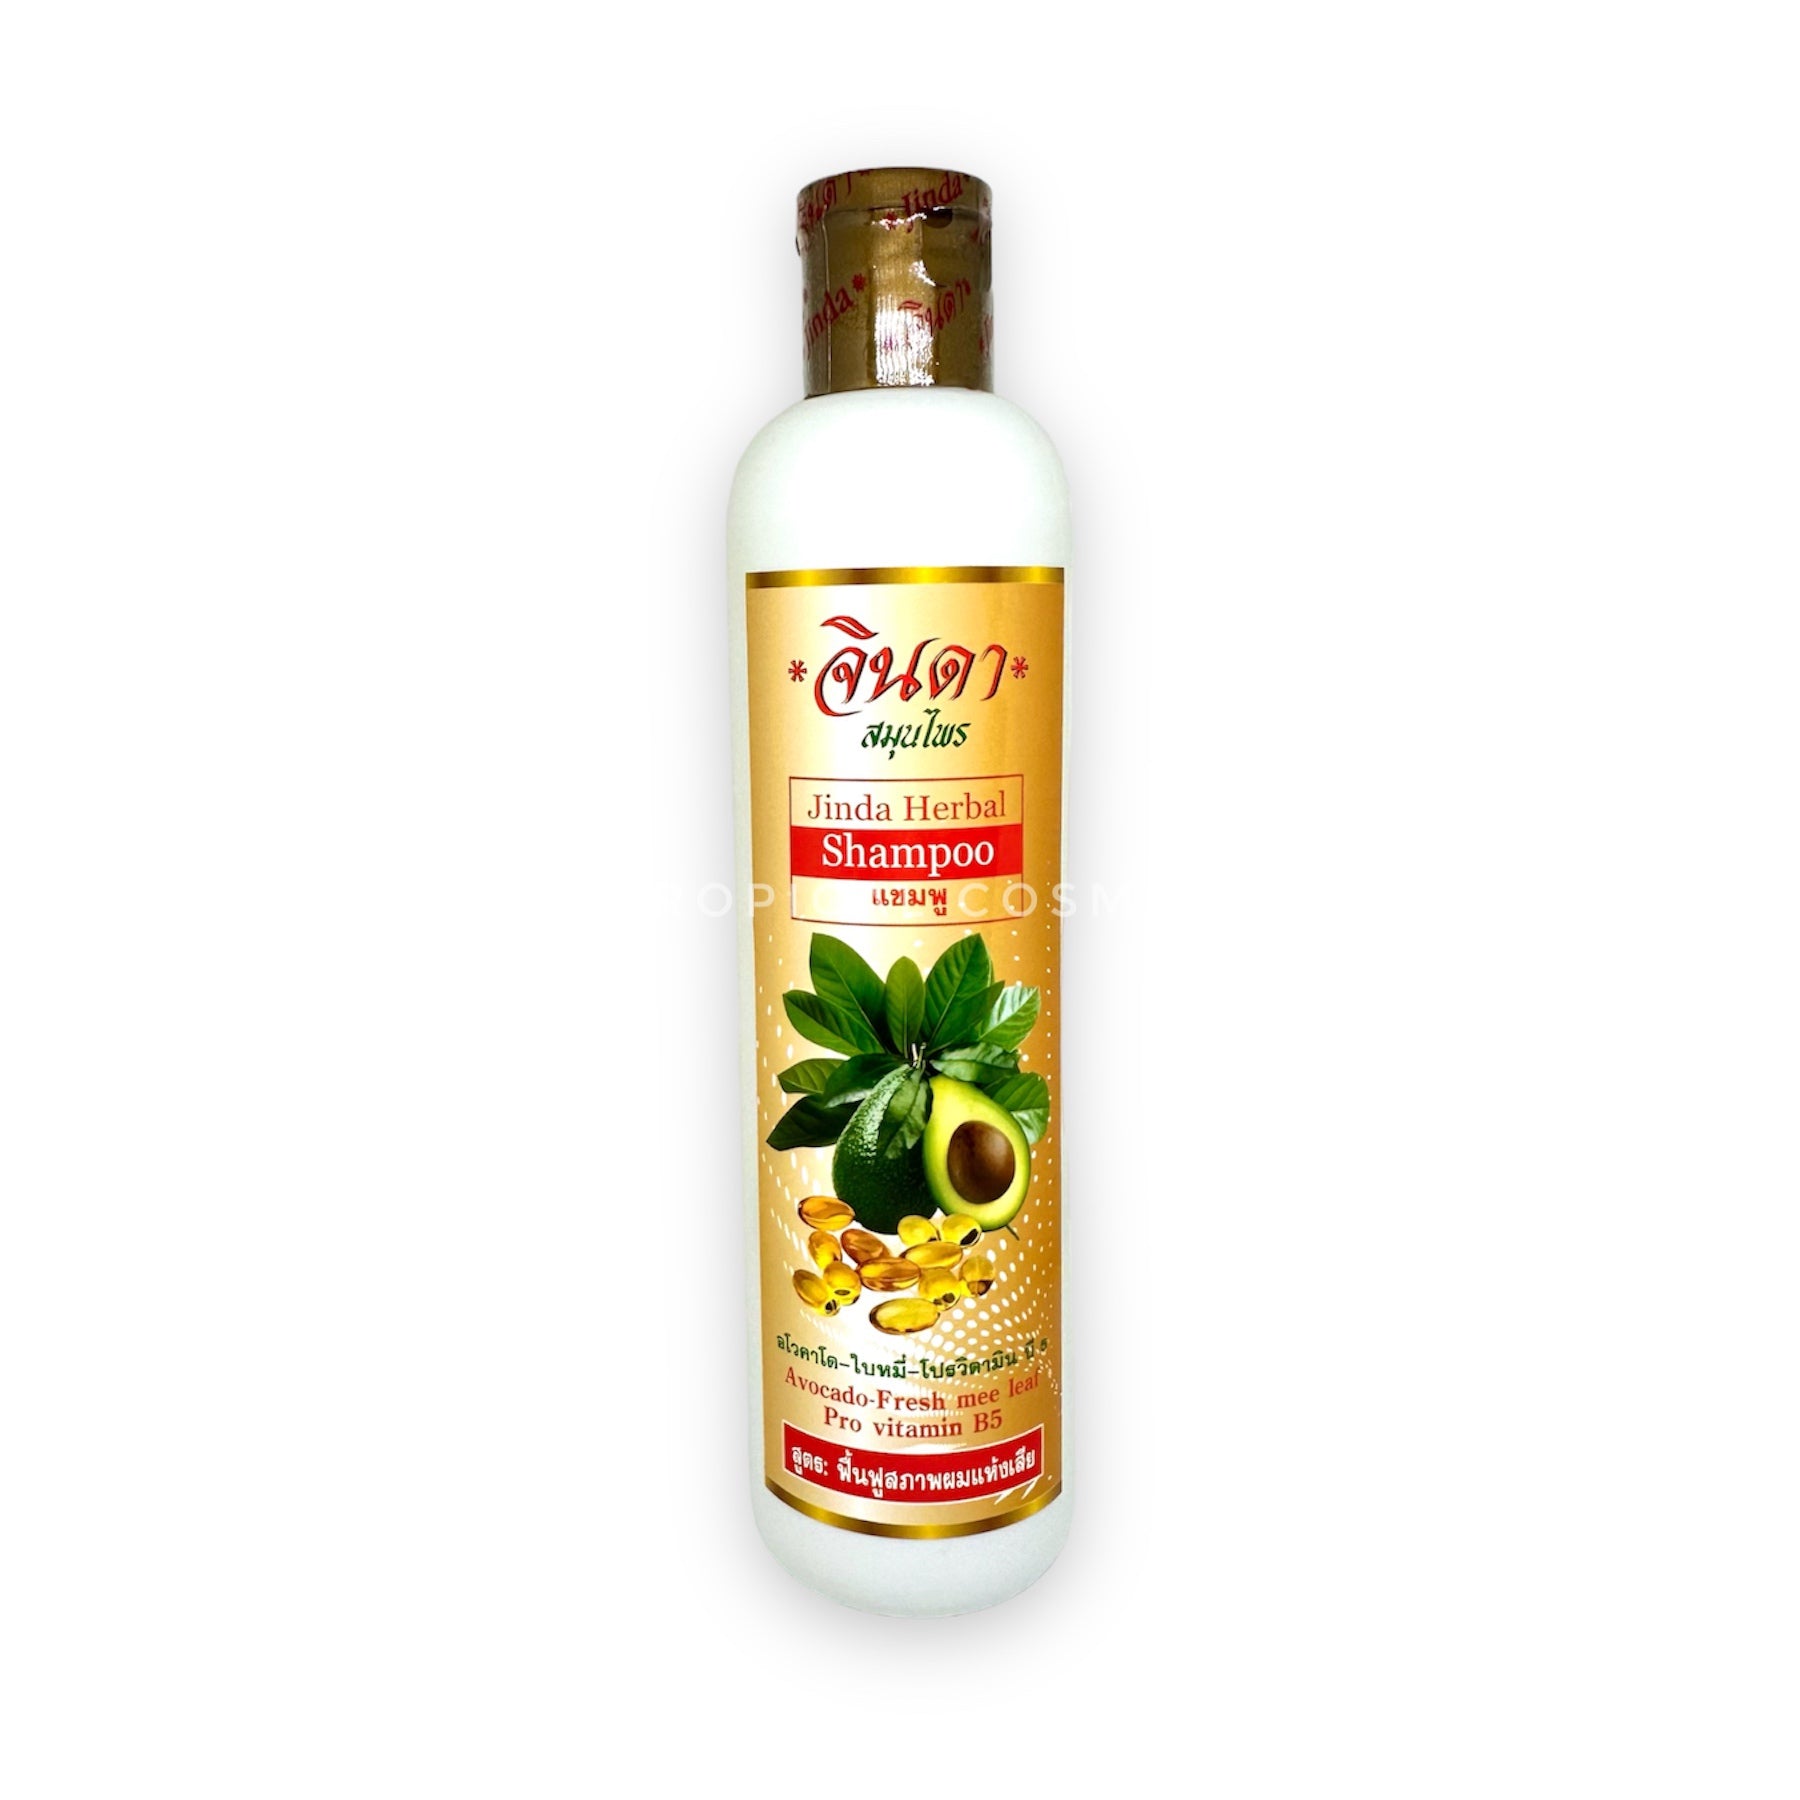 JINDA Herbal Shampoo Avocado Fresh mee leaf Pro Vitamine B5 250 ml., Шампунь с маслом авокадо от выпадения и для отращивания волос 250 мл.